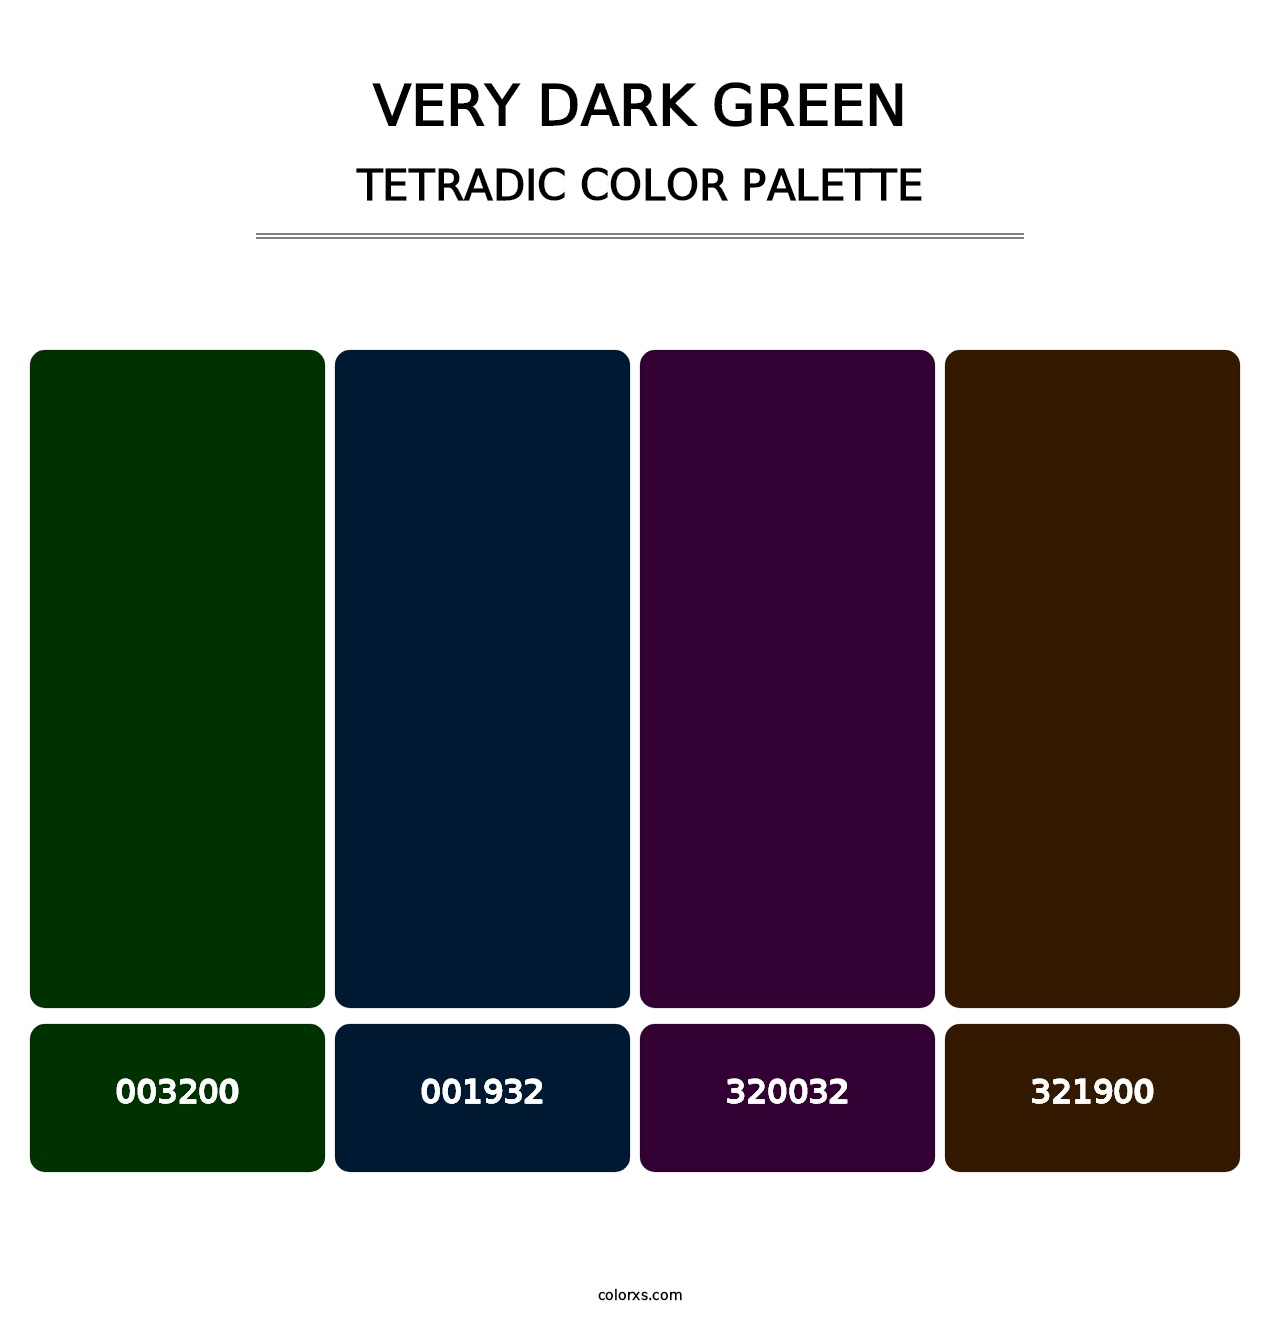 Very Dark Green - Tetradic Color Palette